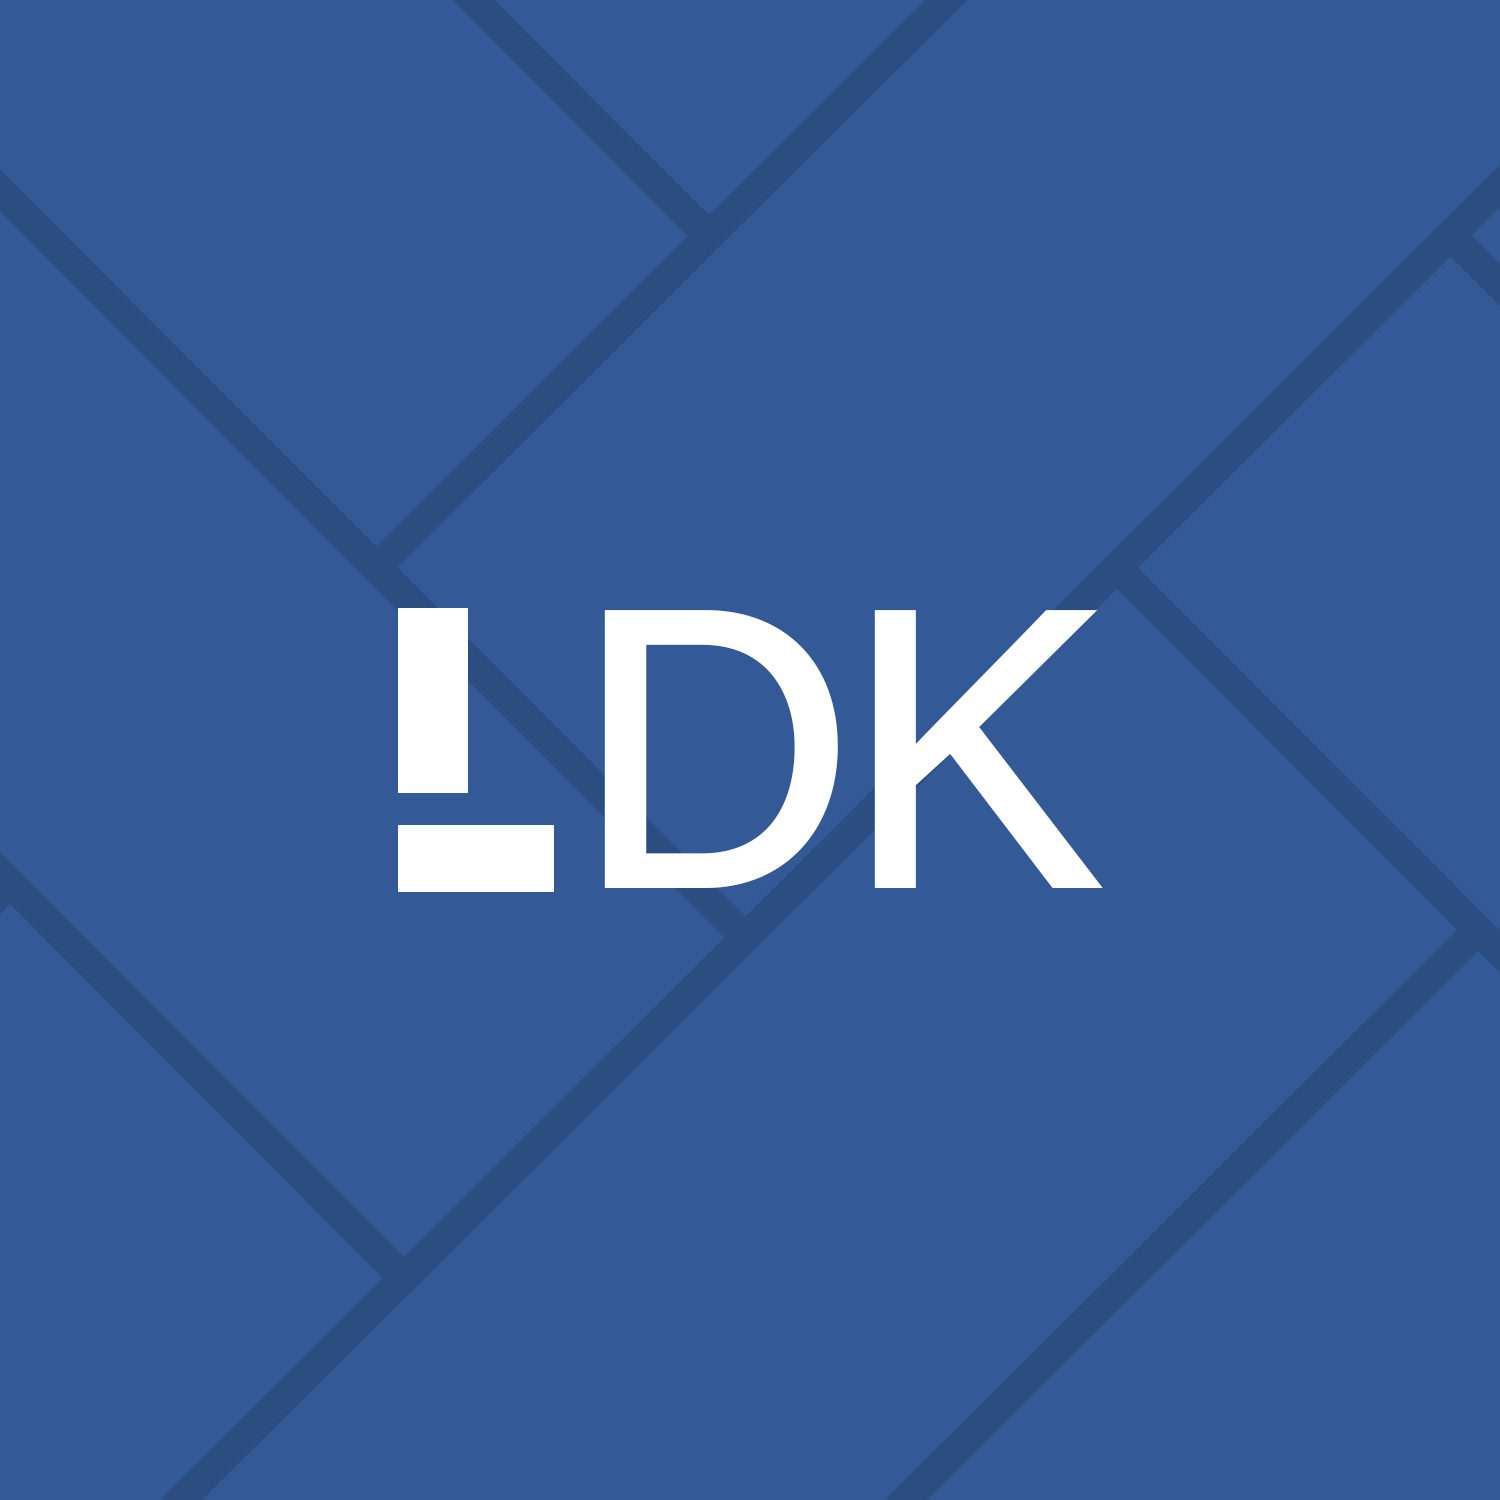 Litecoin Development Kit